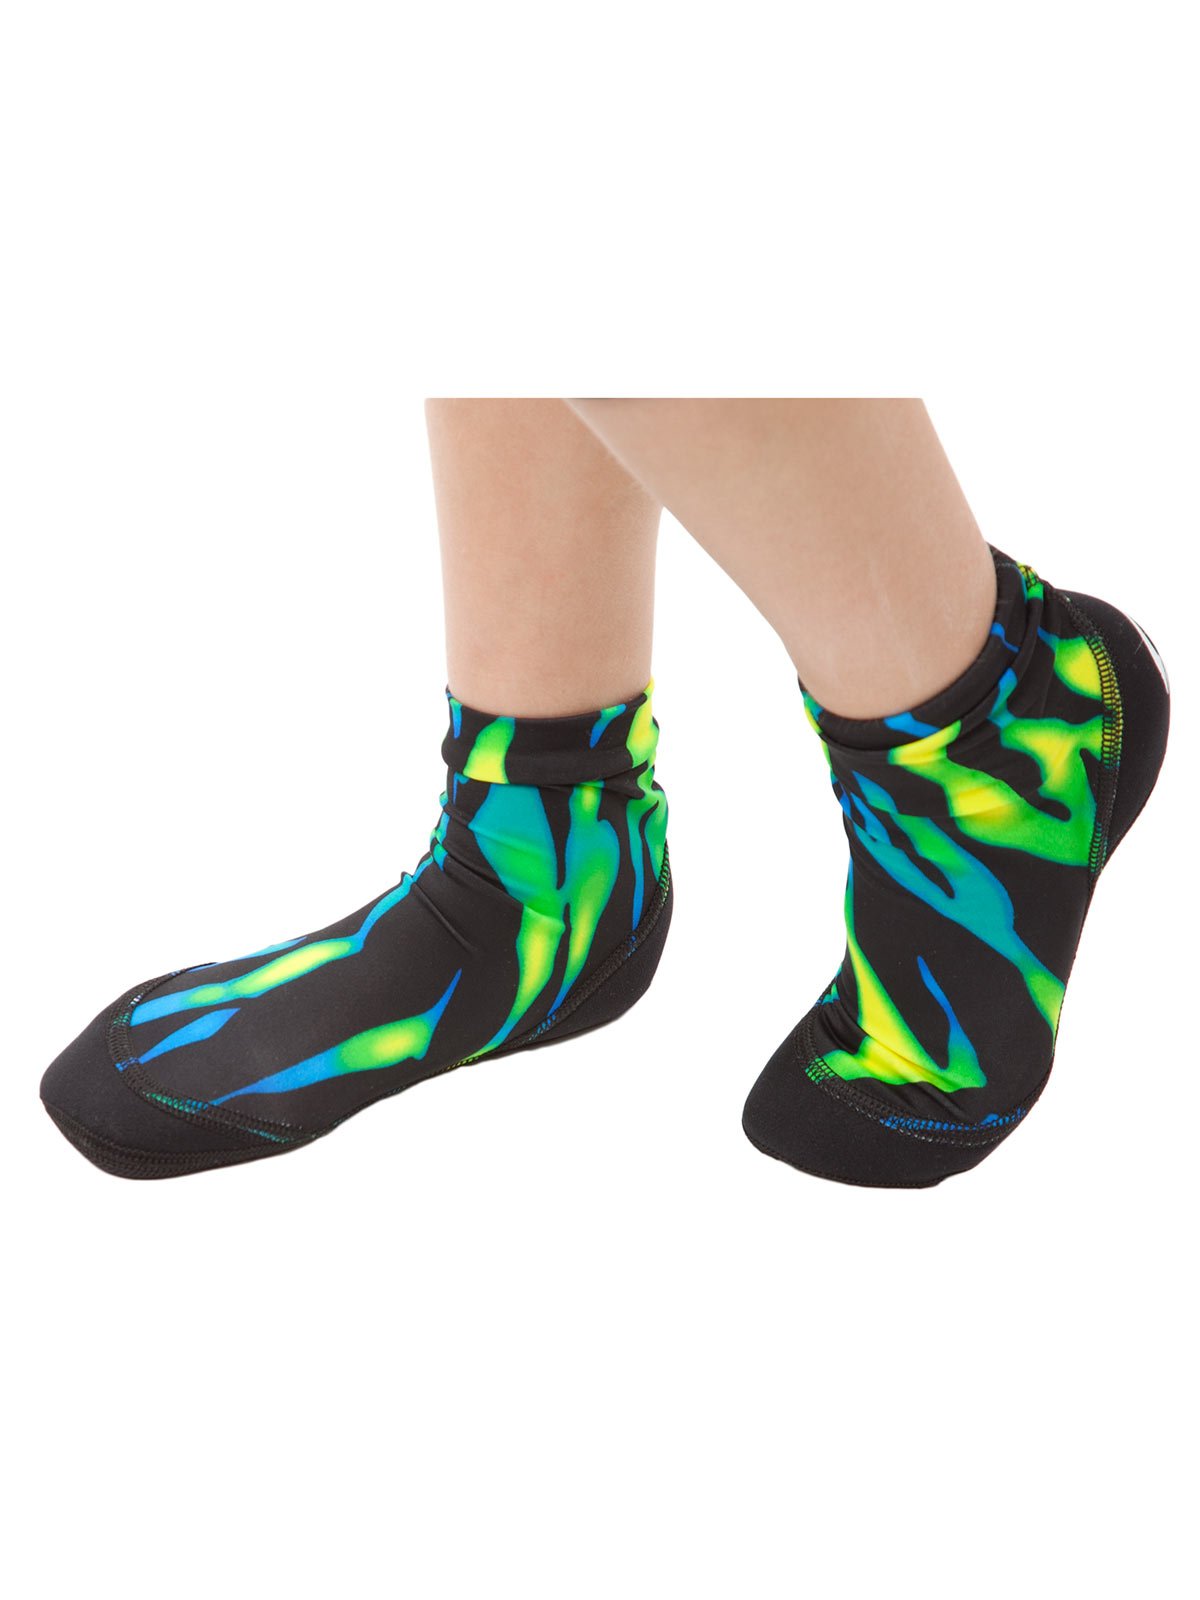 Sand Socks Vincere Soft-Soled Beach Socks (Toddler/Child)